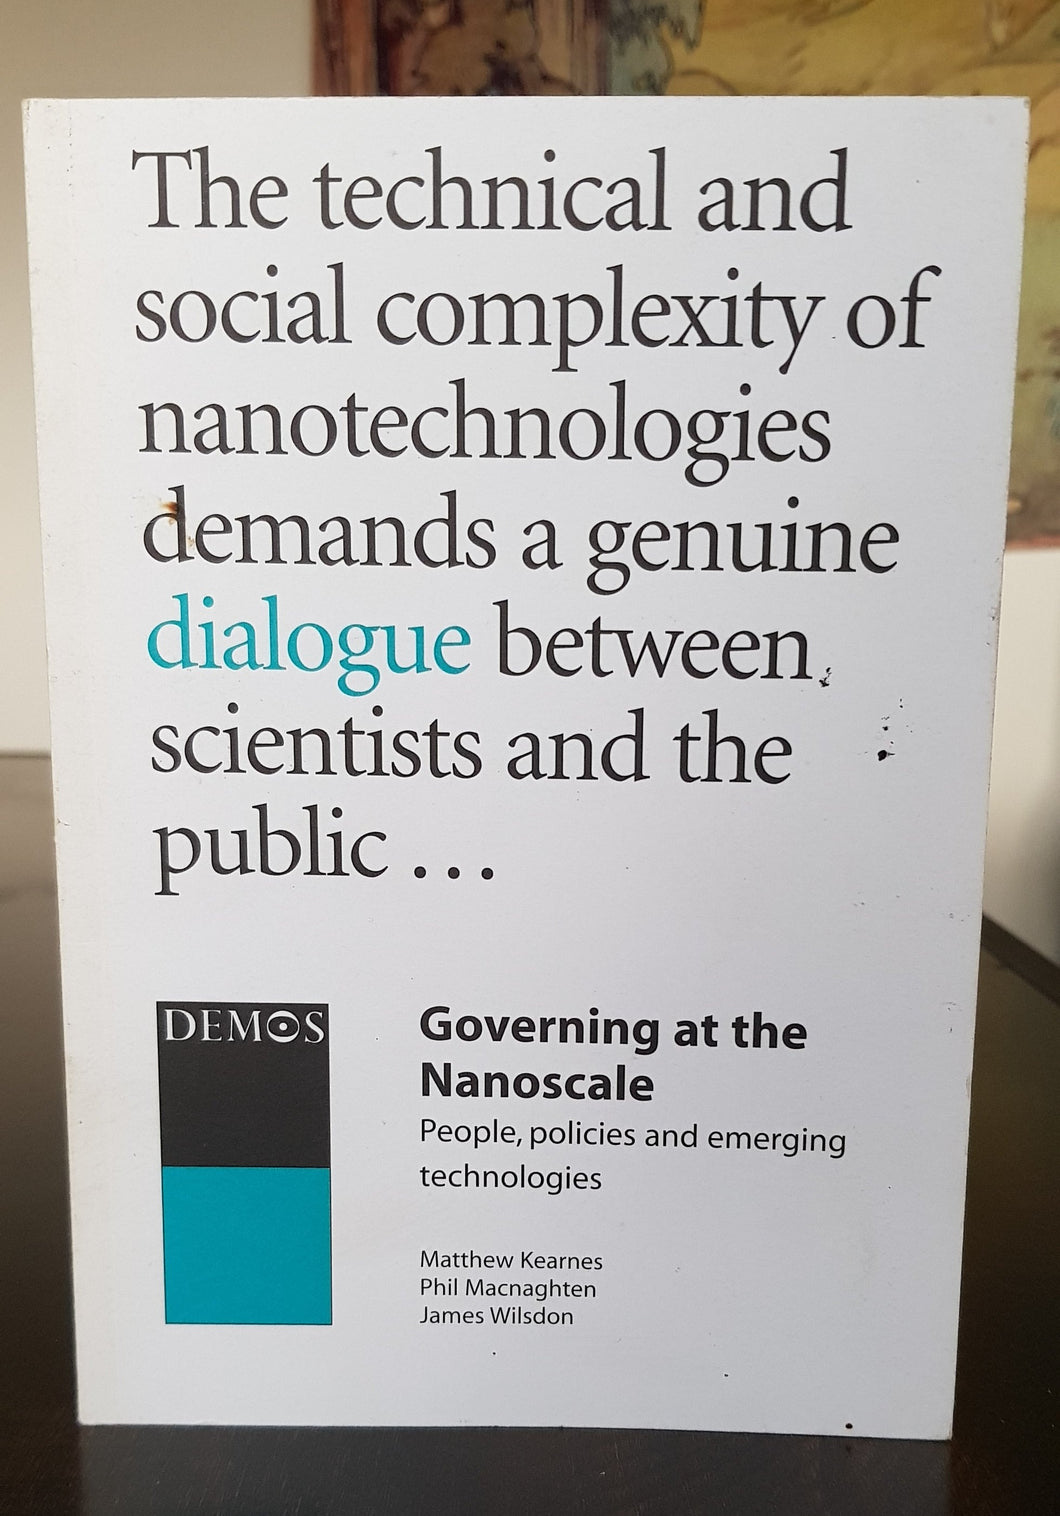 Governing at the Nanoscale by Matthew Kearnes, Phil Macnaghten, James Wilsdon